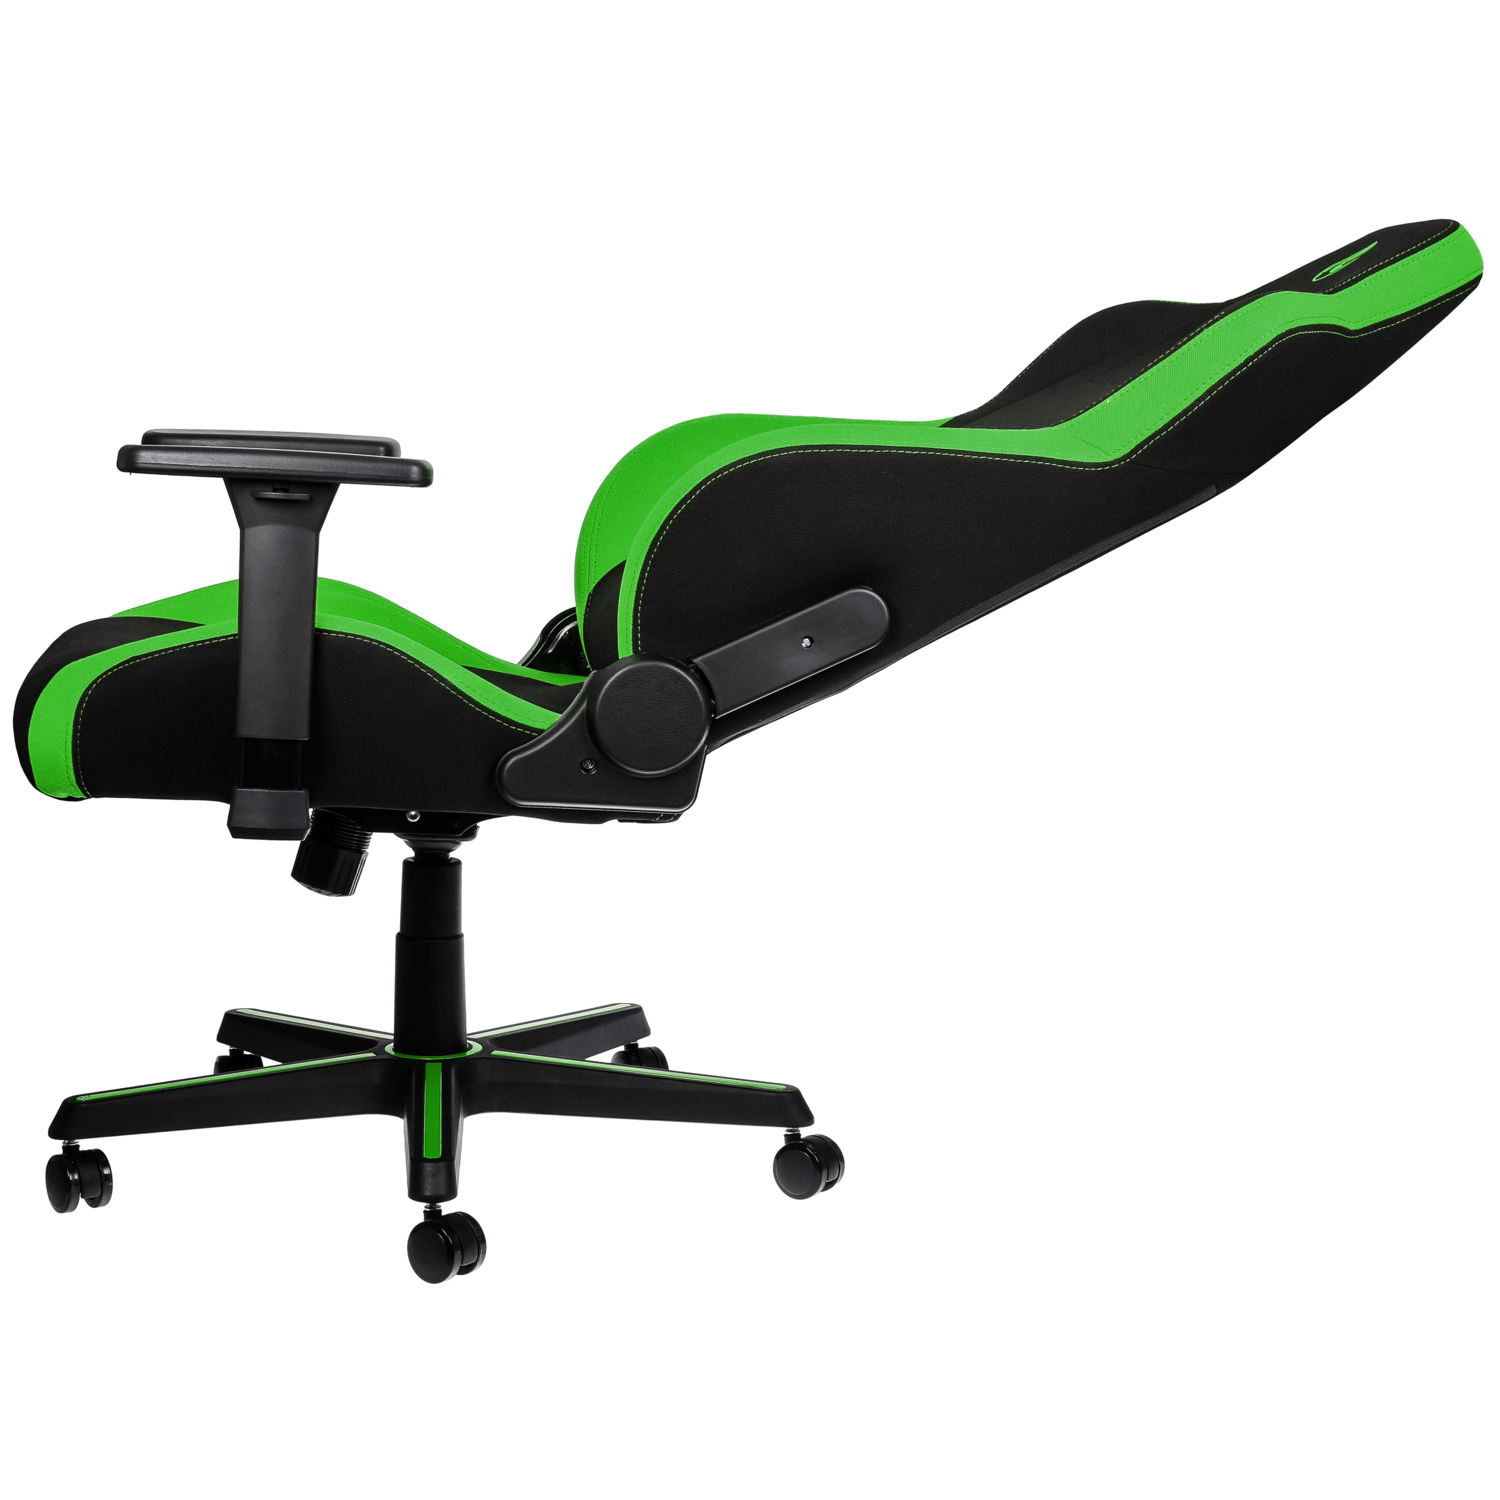  - S300 Gaming Chair Atomic Green